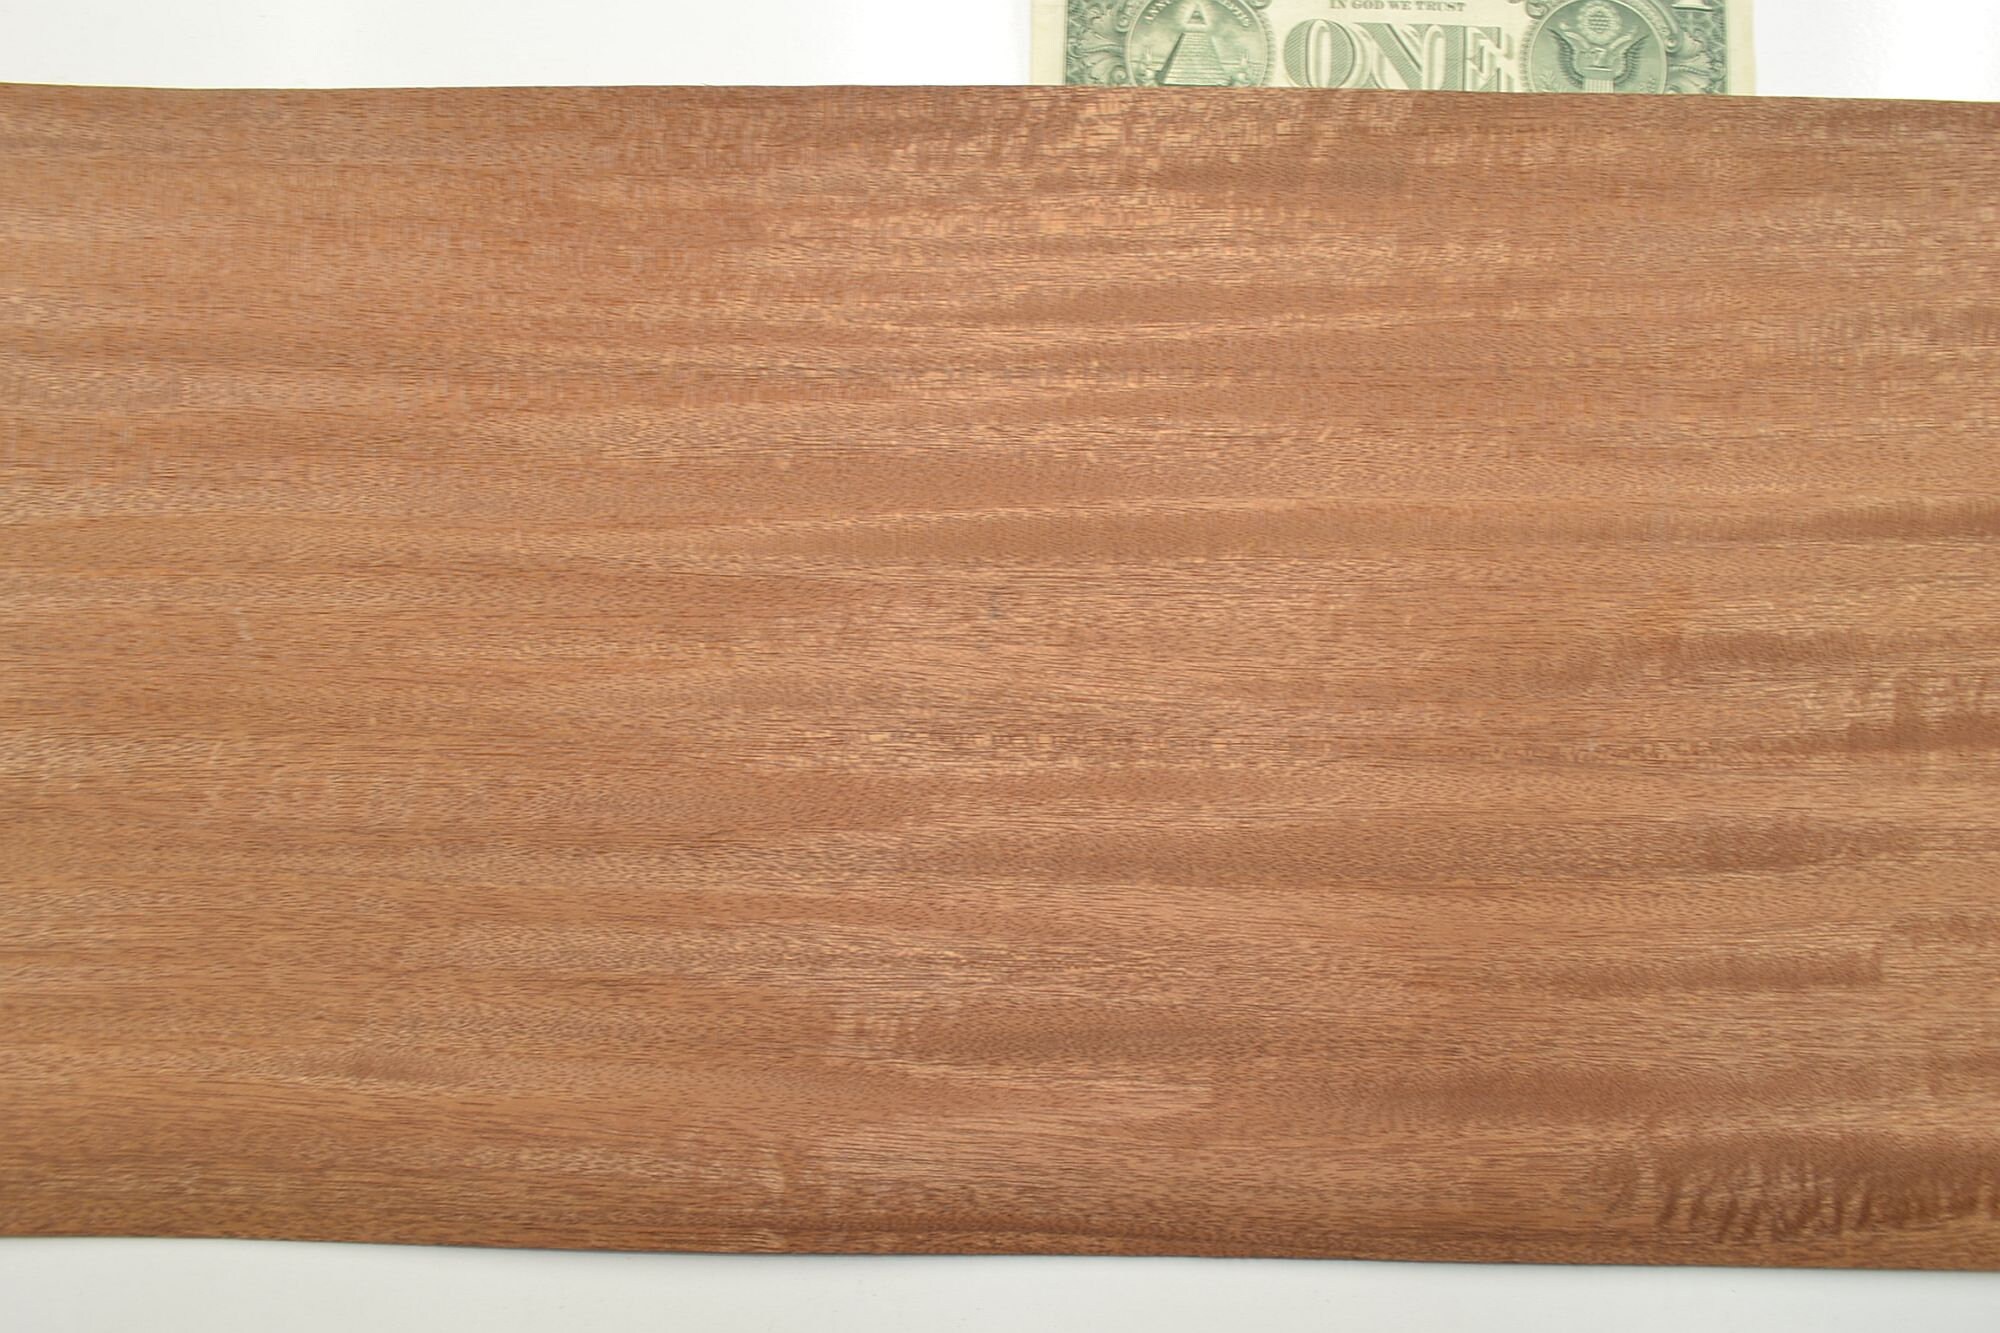 Marbled Sapeli Raw Wood Veneer Sheets at 6.75 x 28 inches 1/42nd        d8709-42 